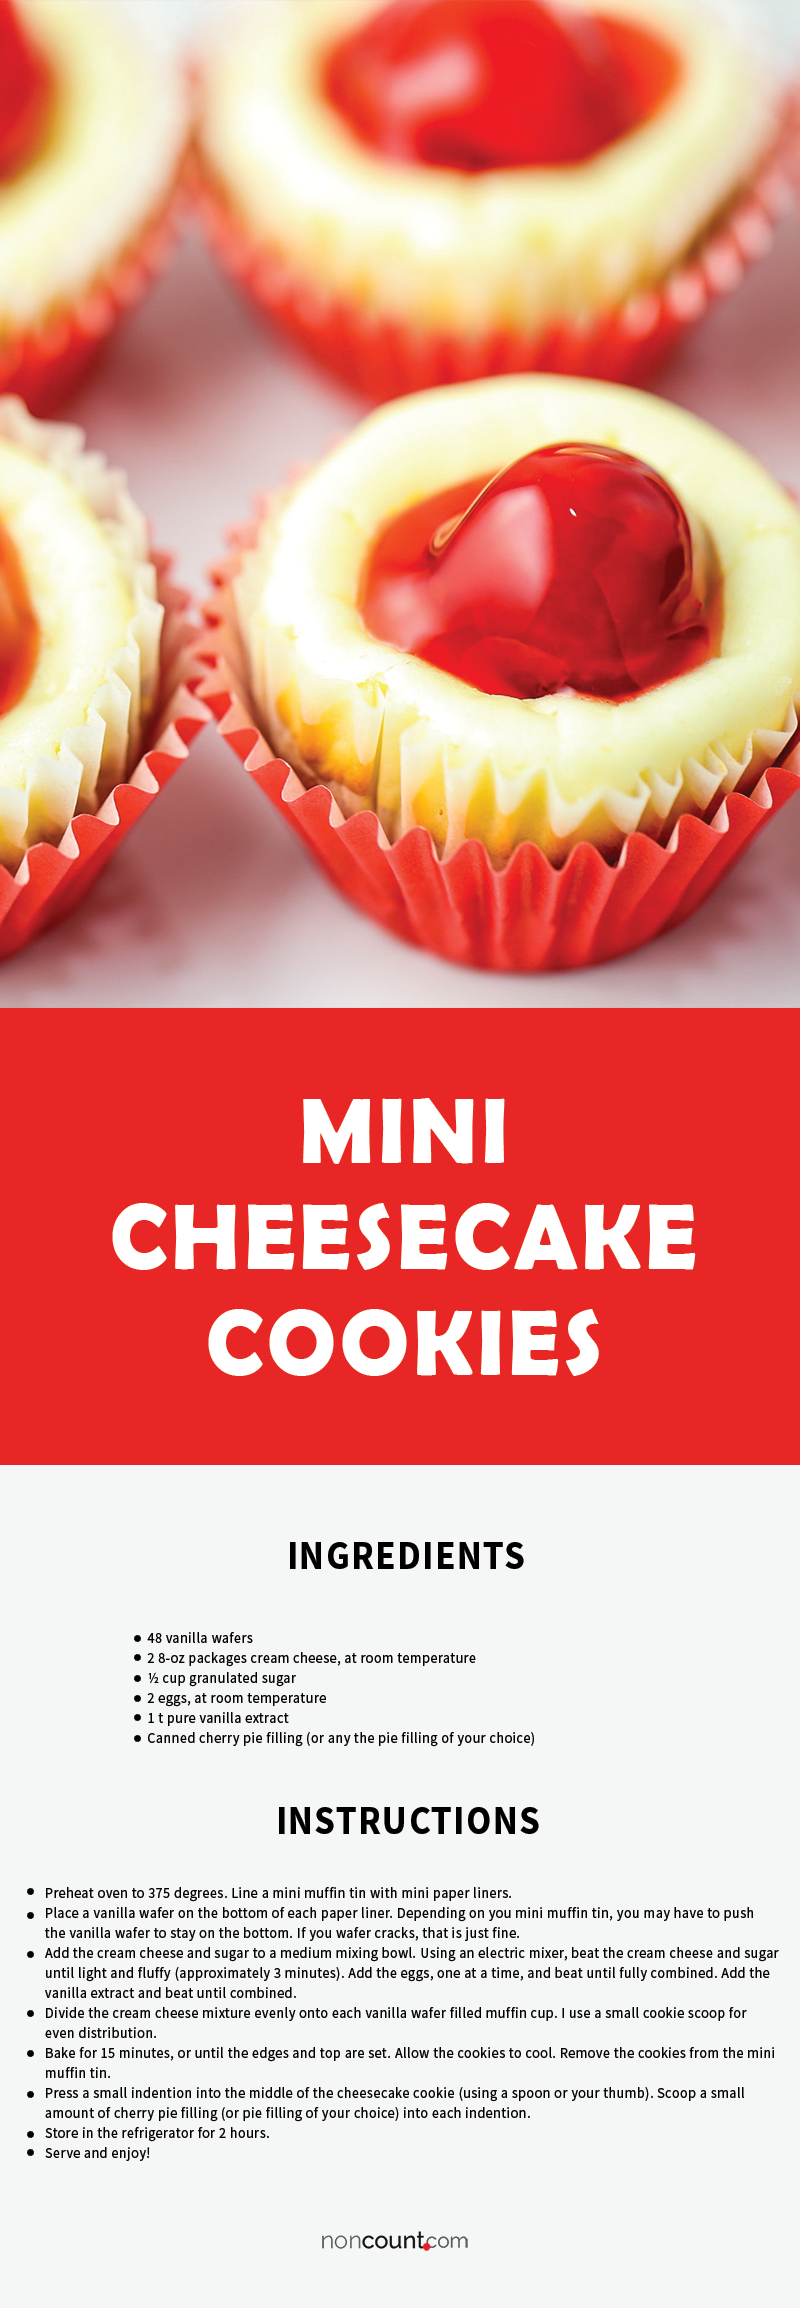 Mini Cheesecake Cookies Recipe Image